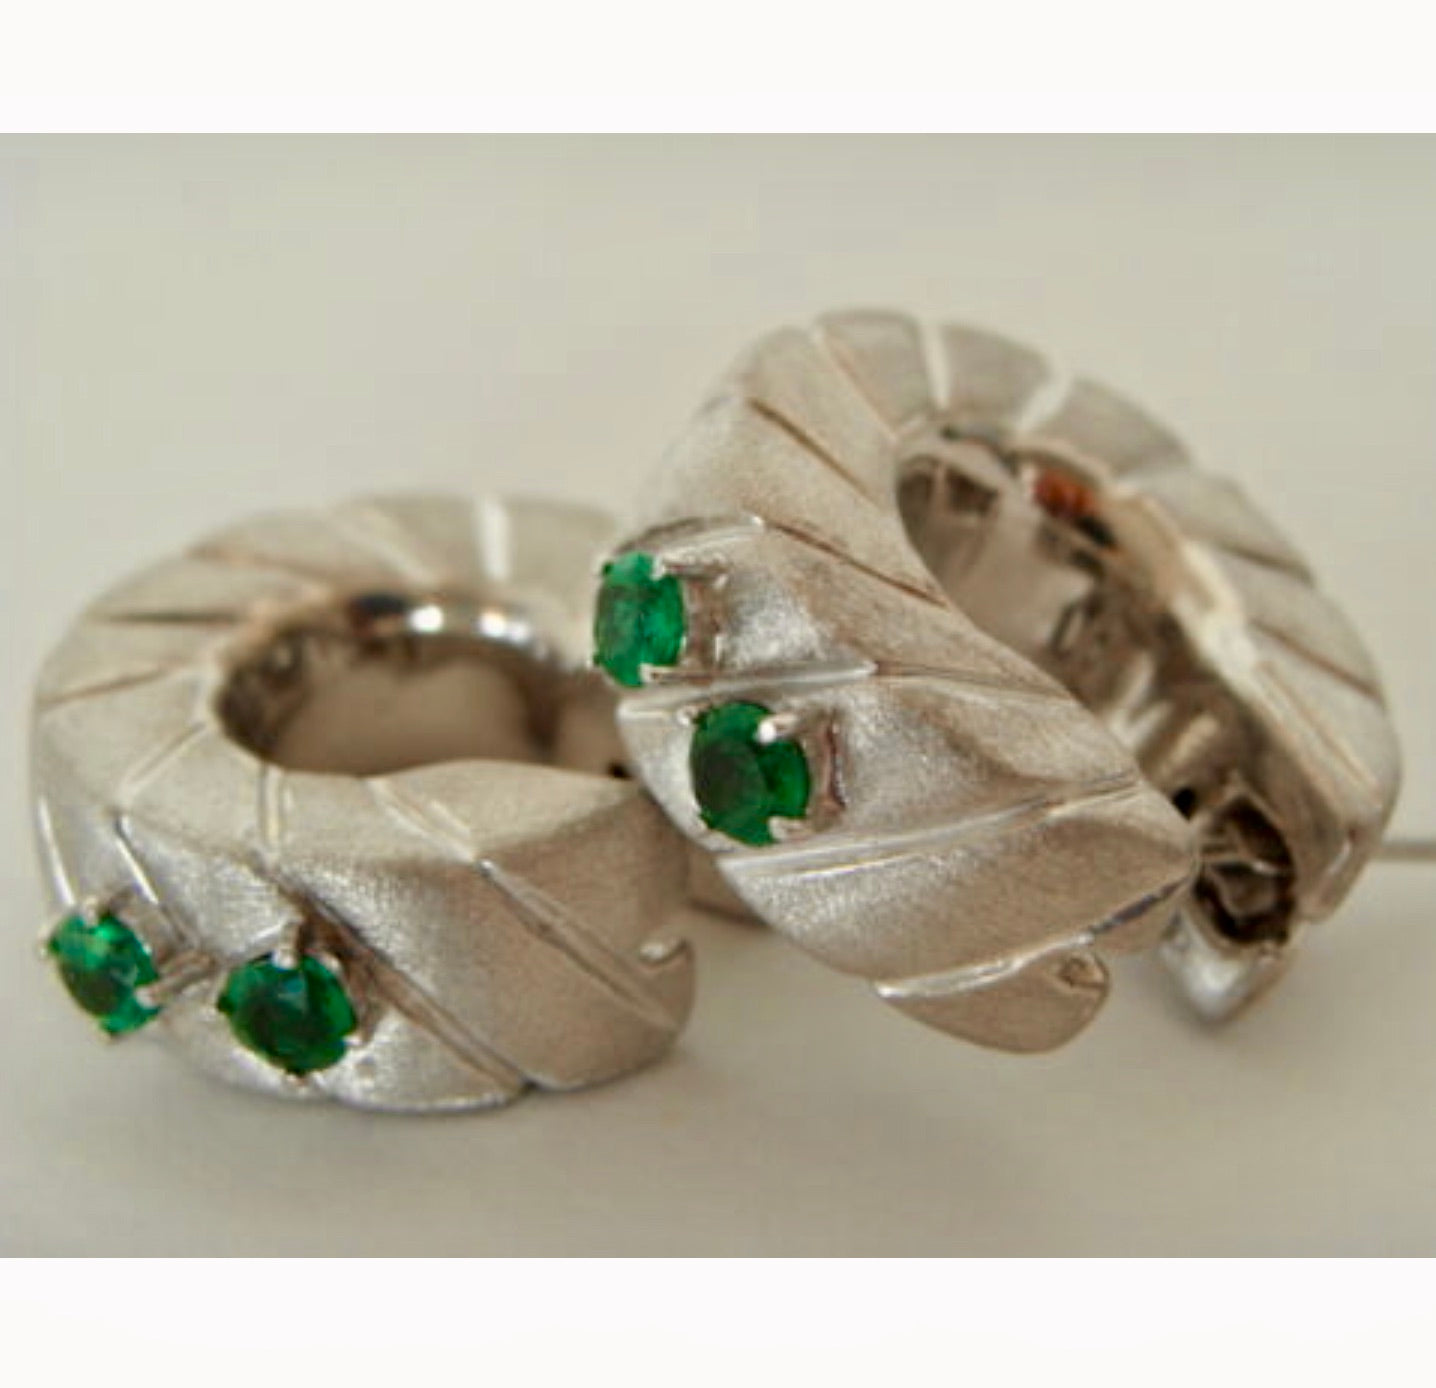 Emerald and 18 Karat White Gold Hoop Earrings